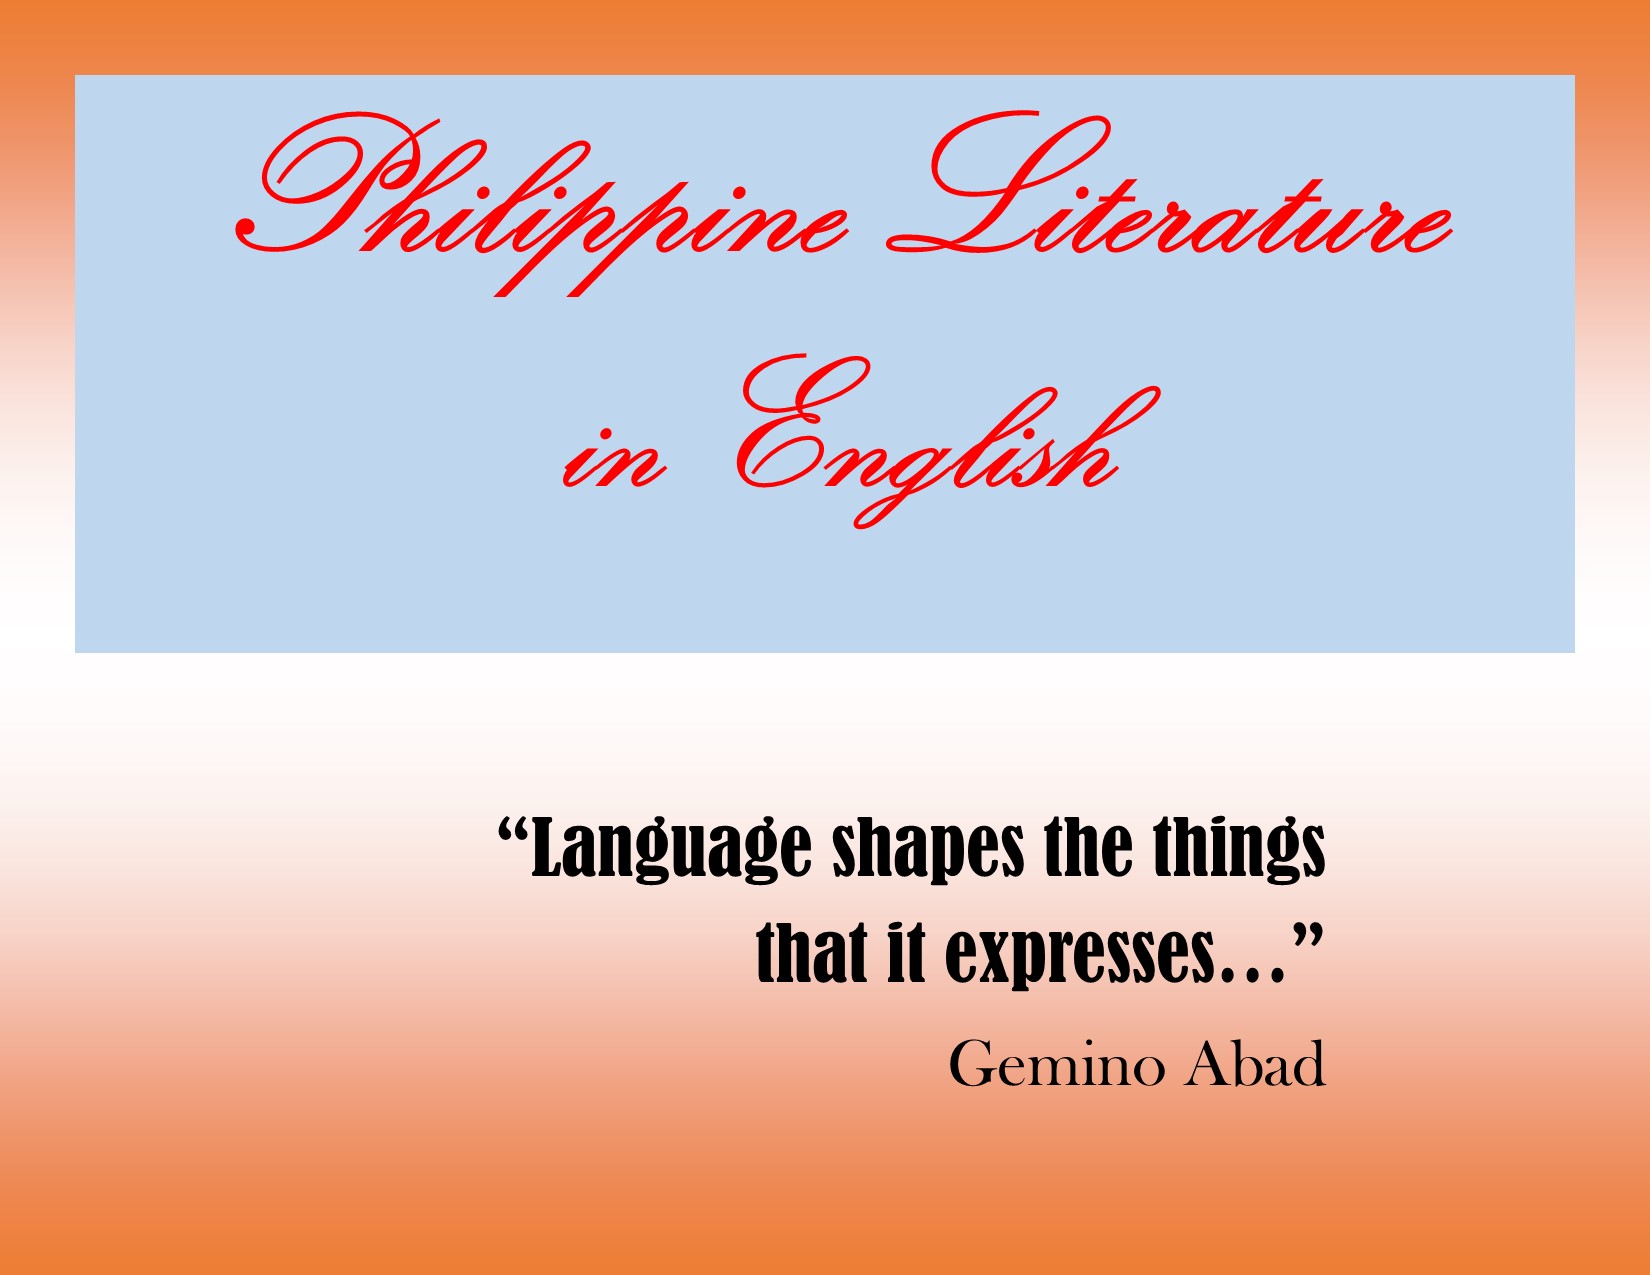 Survey of Philippine Literature in English